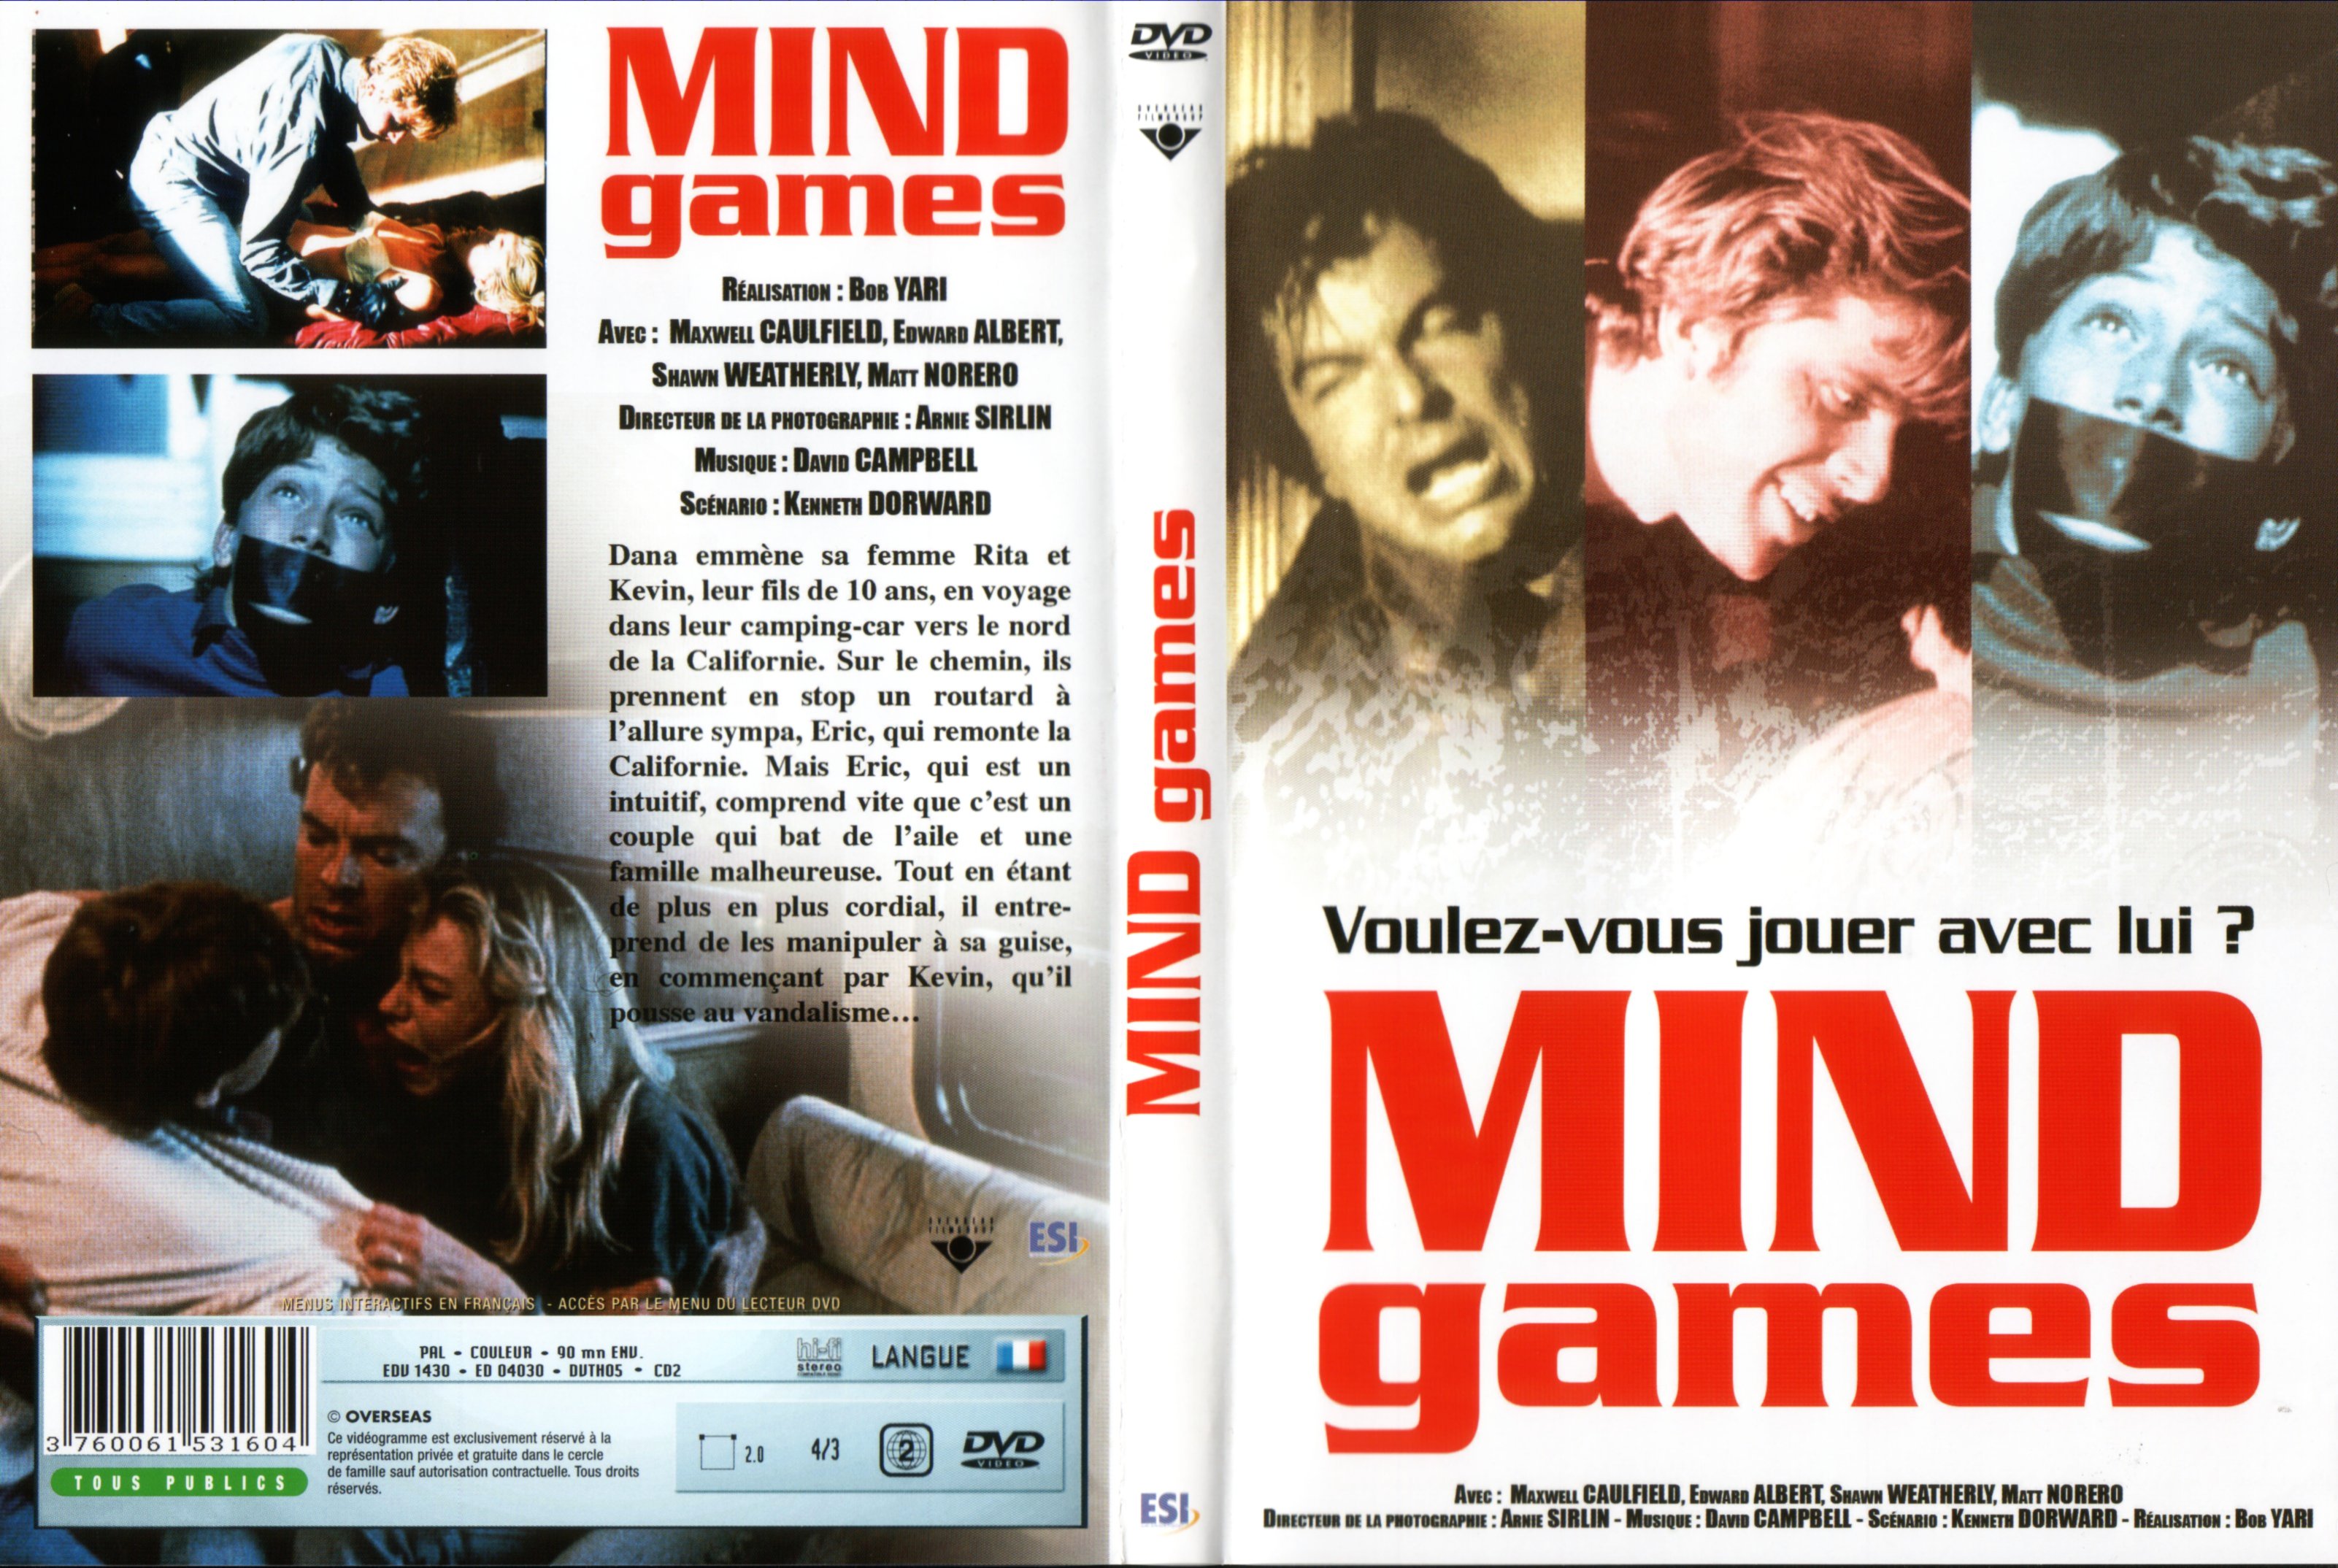 Jaquette DVD Mind games (Bob Yari)